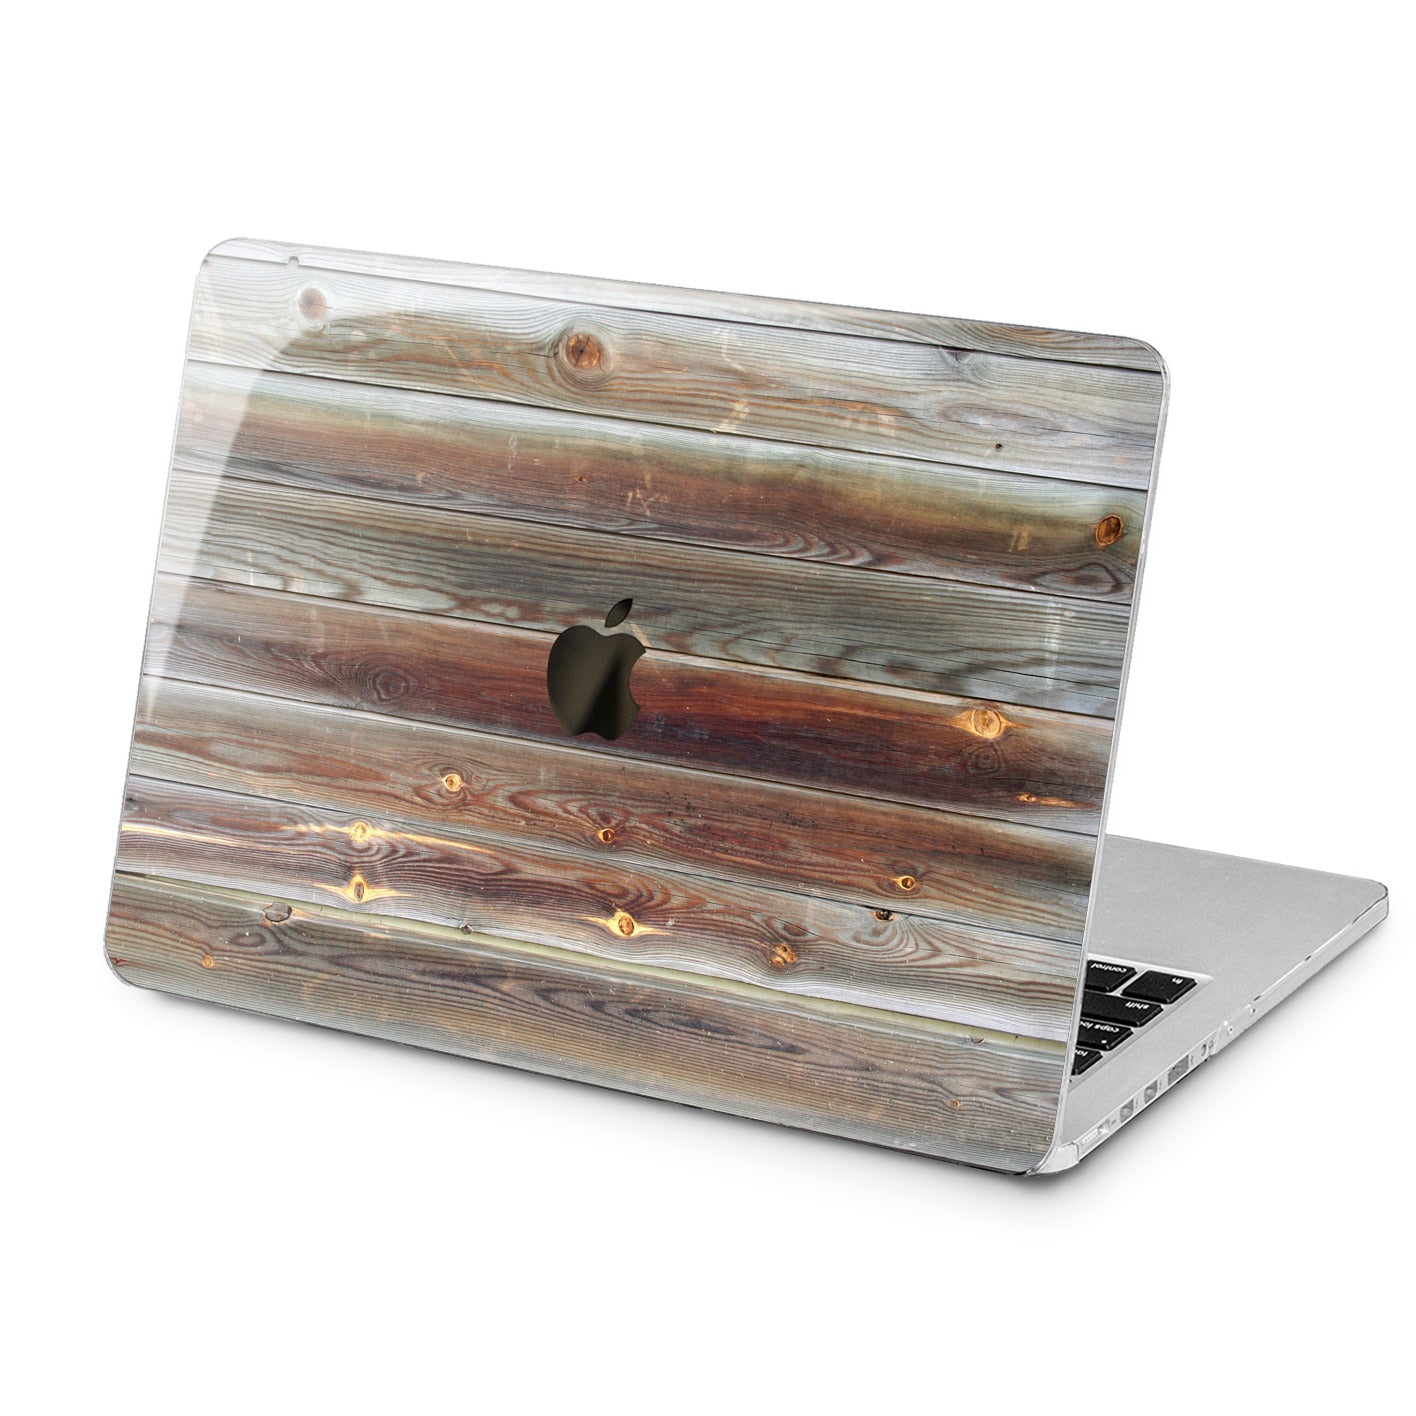 Lex Altern Lex Altern Old Wood Case for your Laptop Apple Macbook.